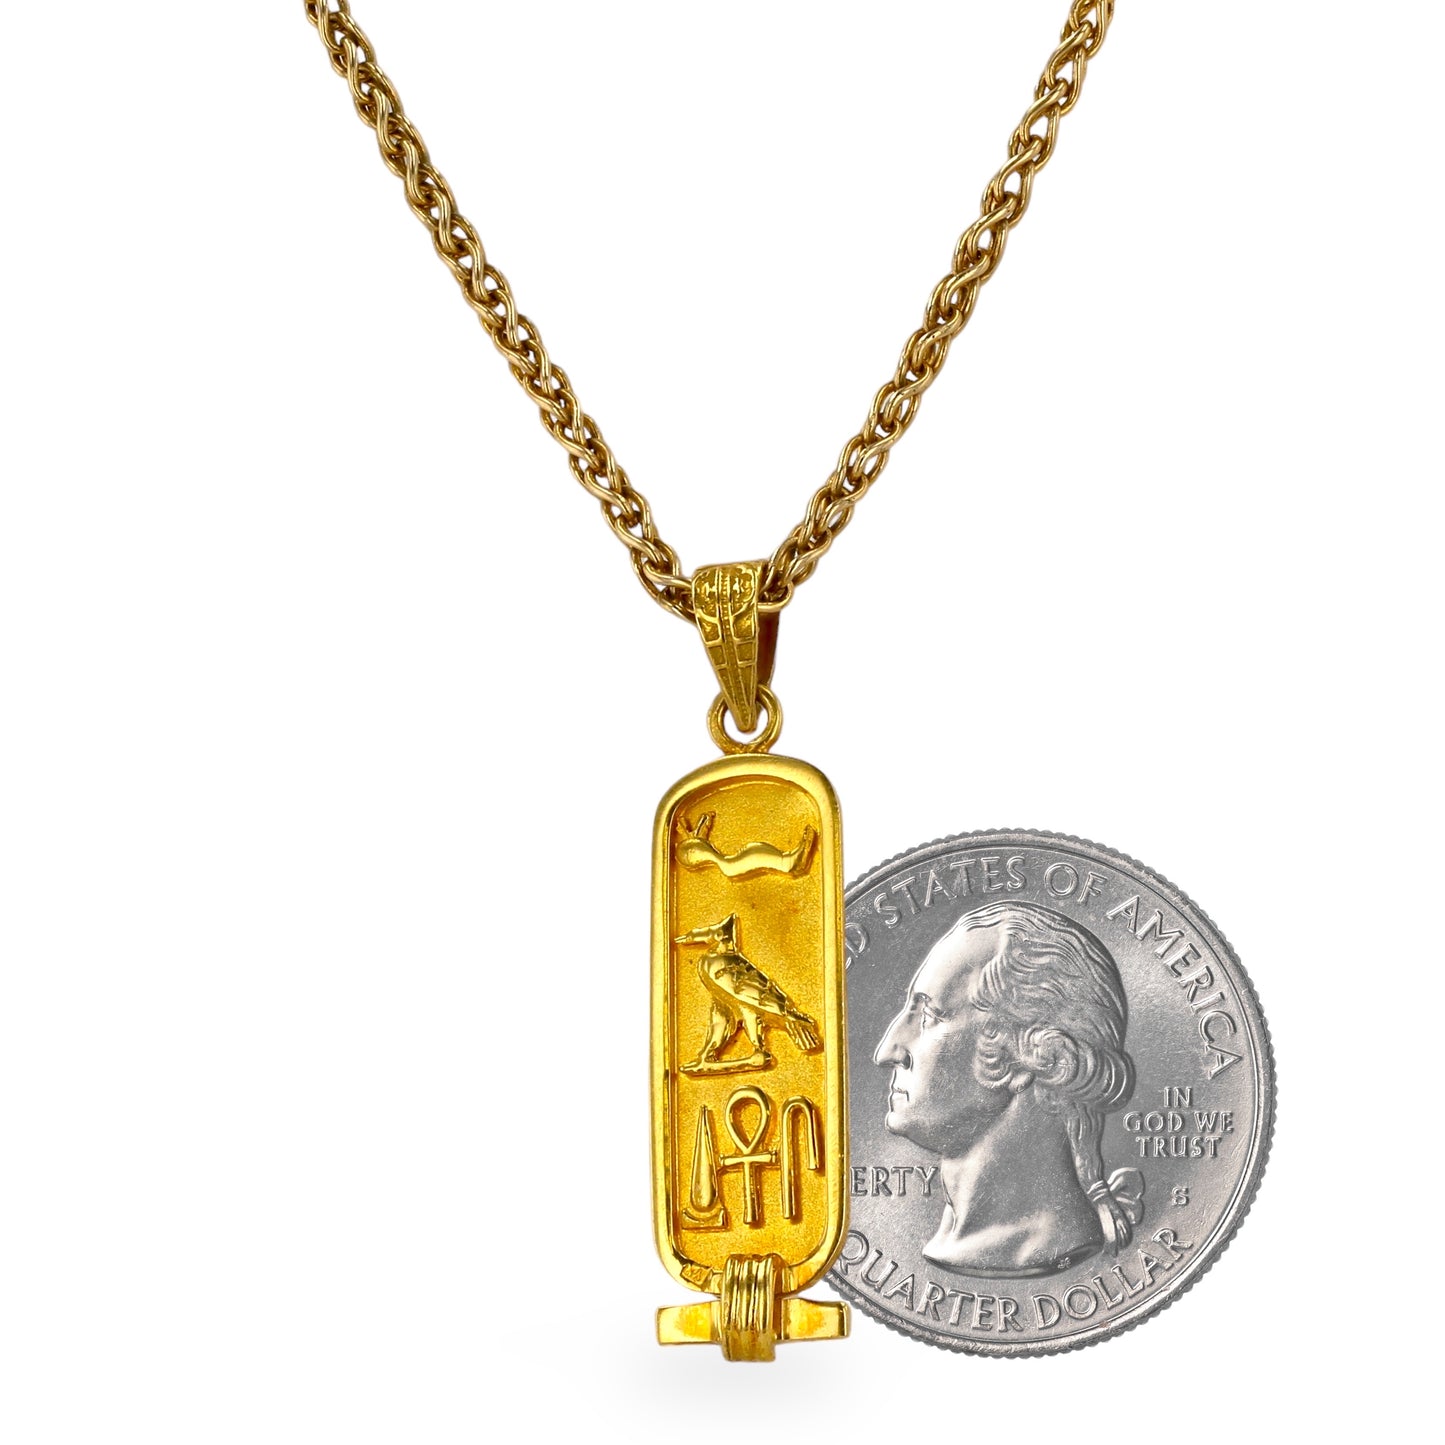 Chain 14k with 18K Gold Hieroglyphic
Cartouche Pendant